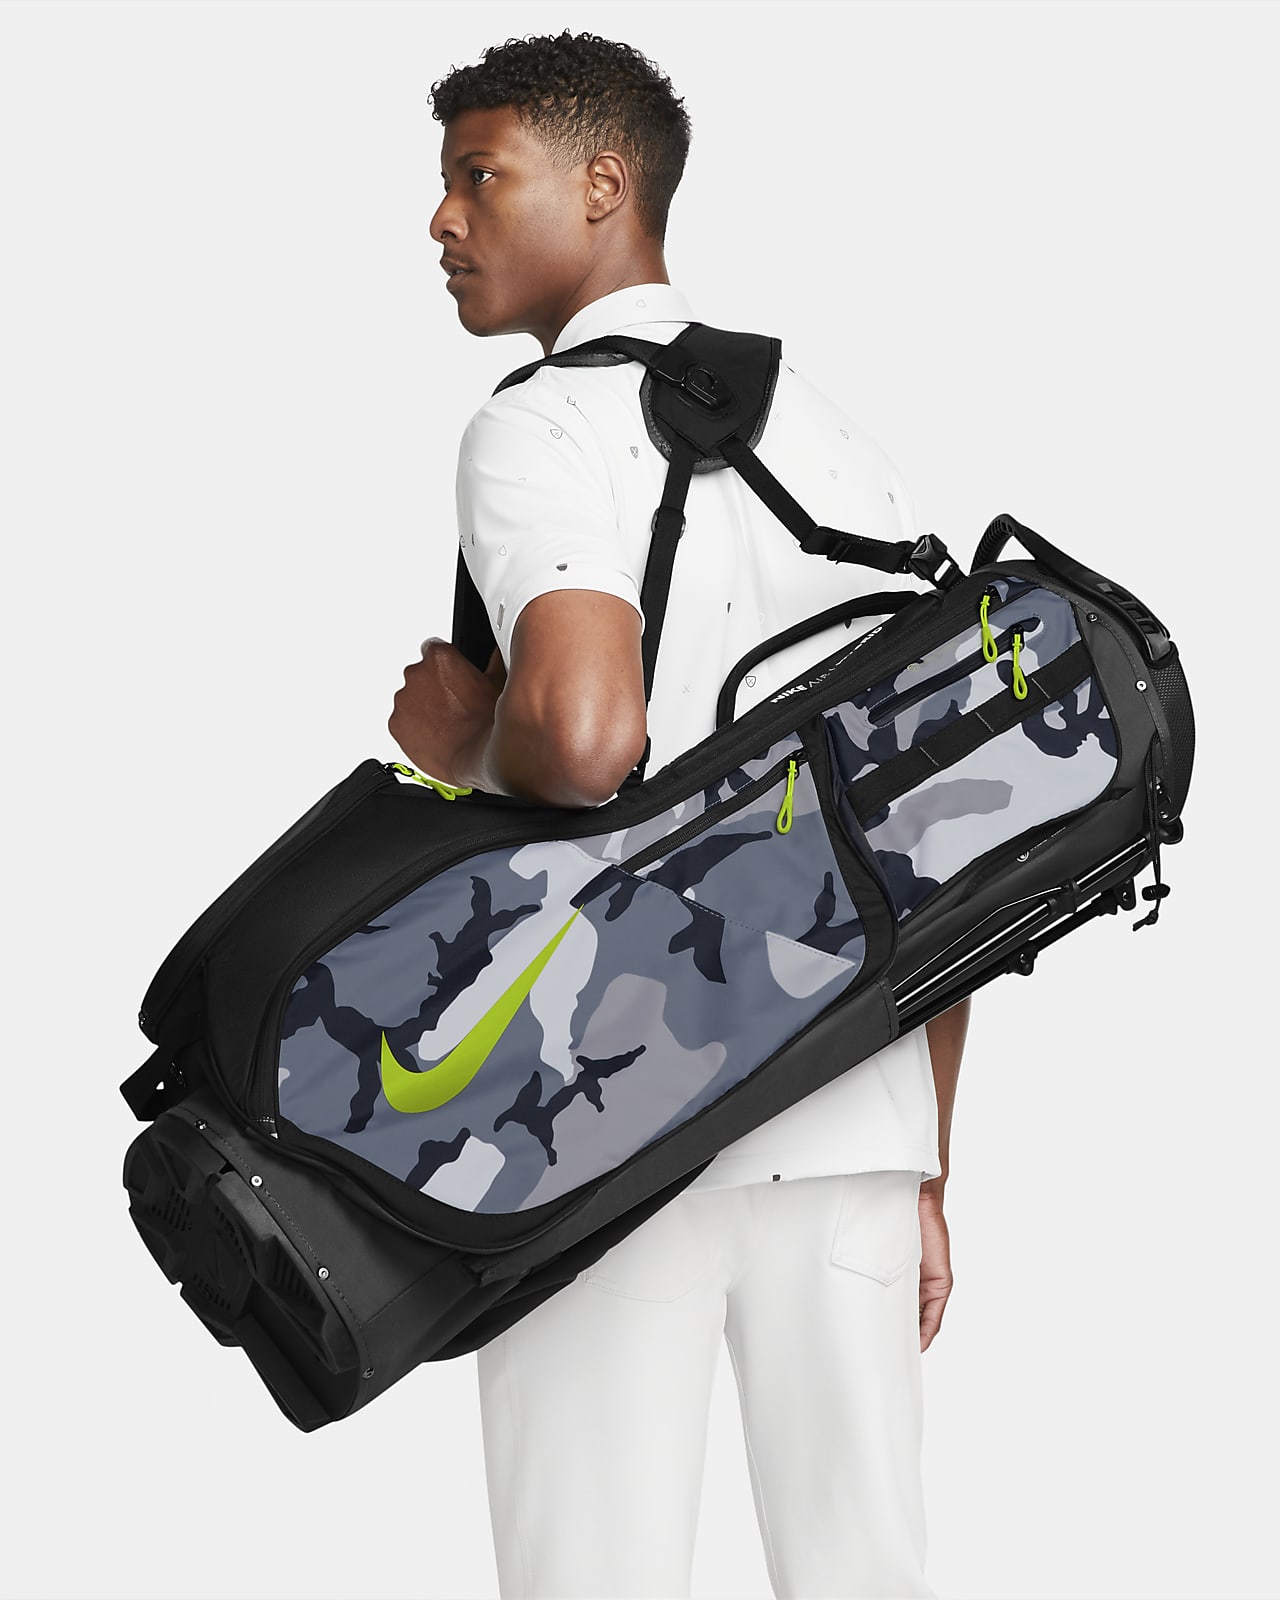 Nike Air Hybrid 2 Golf Bag